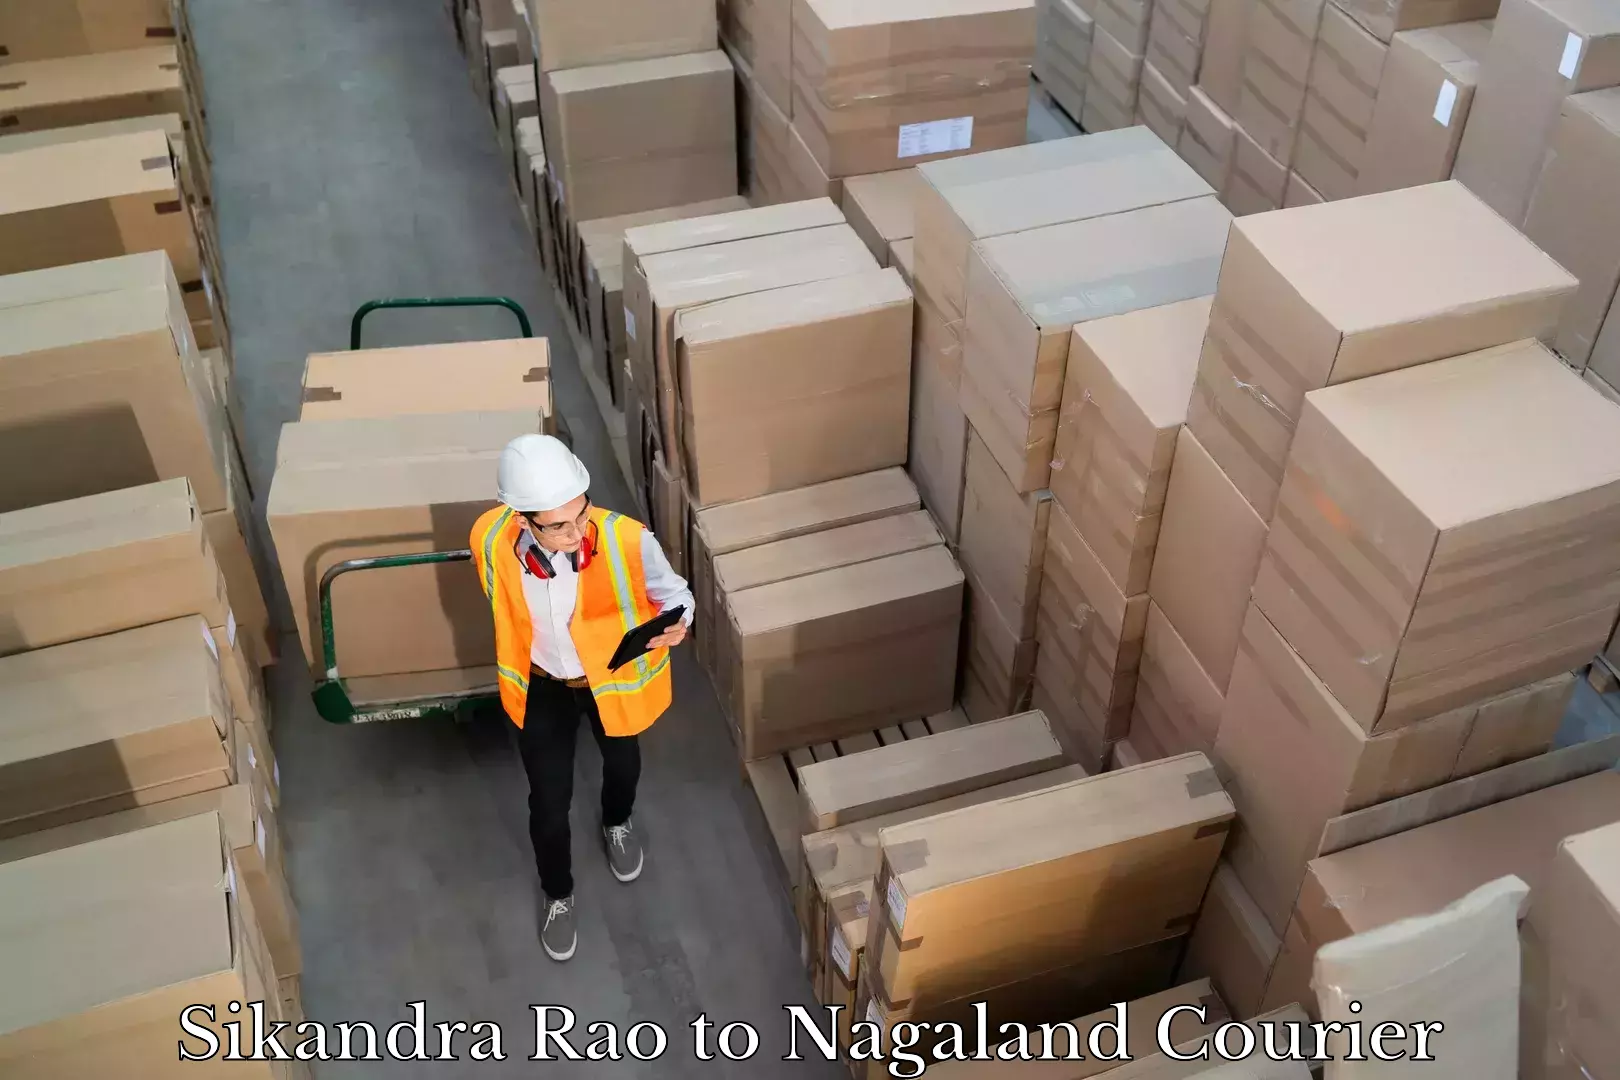 Cash on delivery service Sikandra Rao to Nagaland